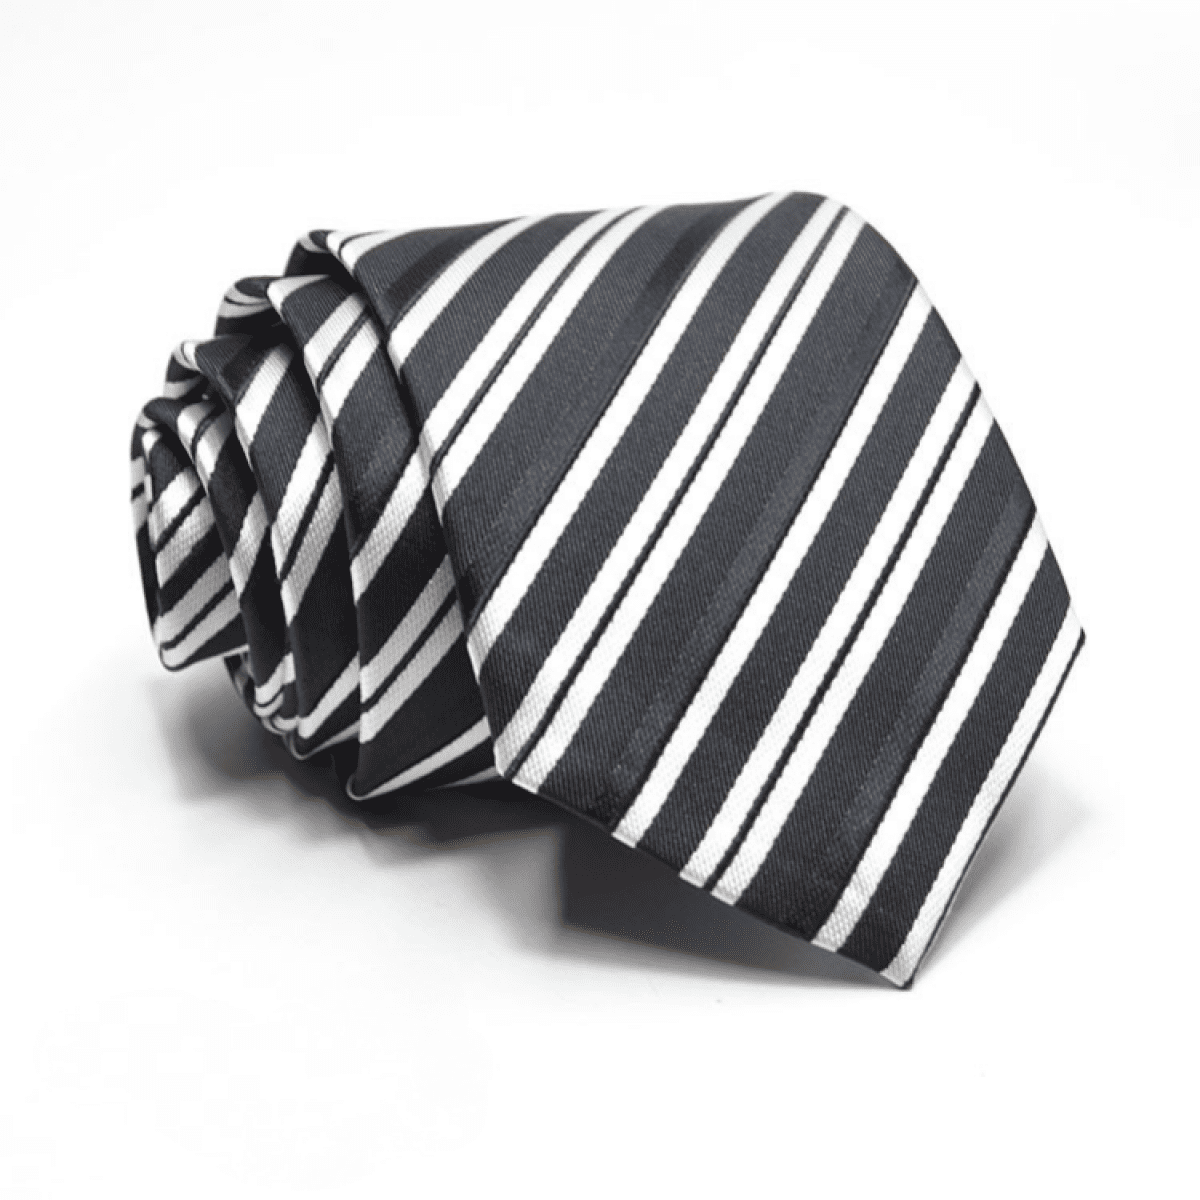 Hot Classic Stripe Brown Beige Black JACQUARD WOVEN 100% Silk Men's Tie Necktie 